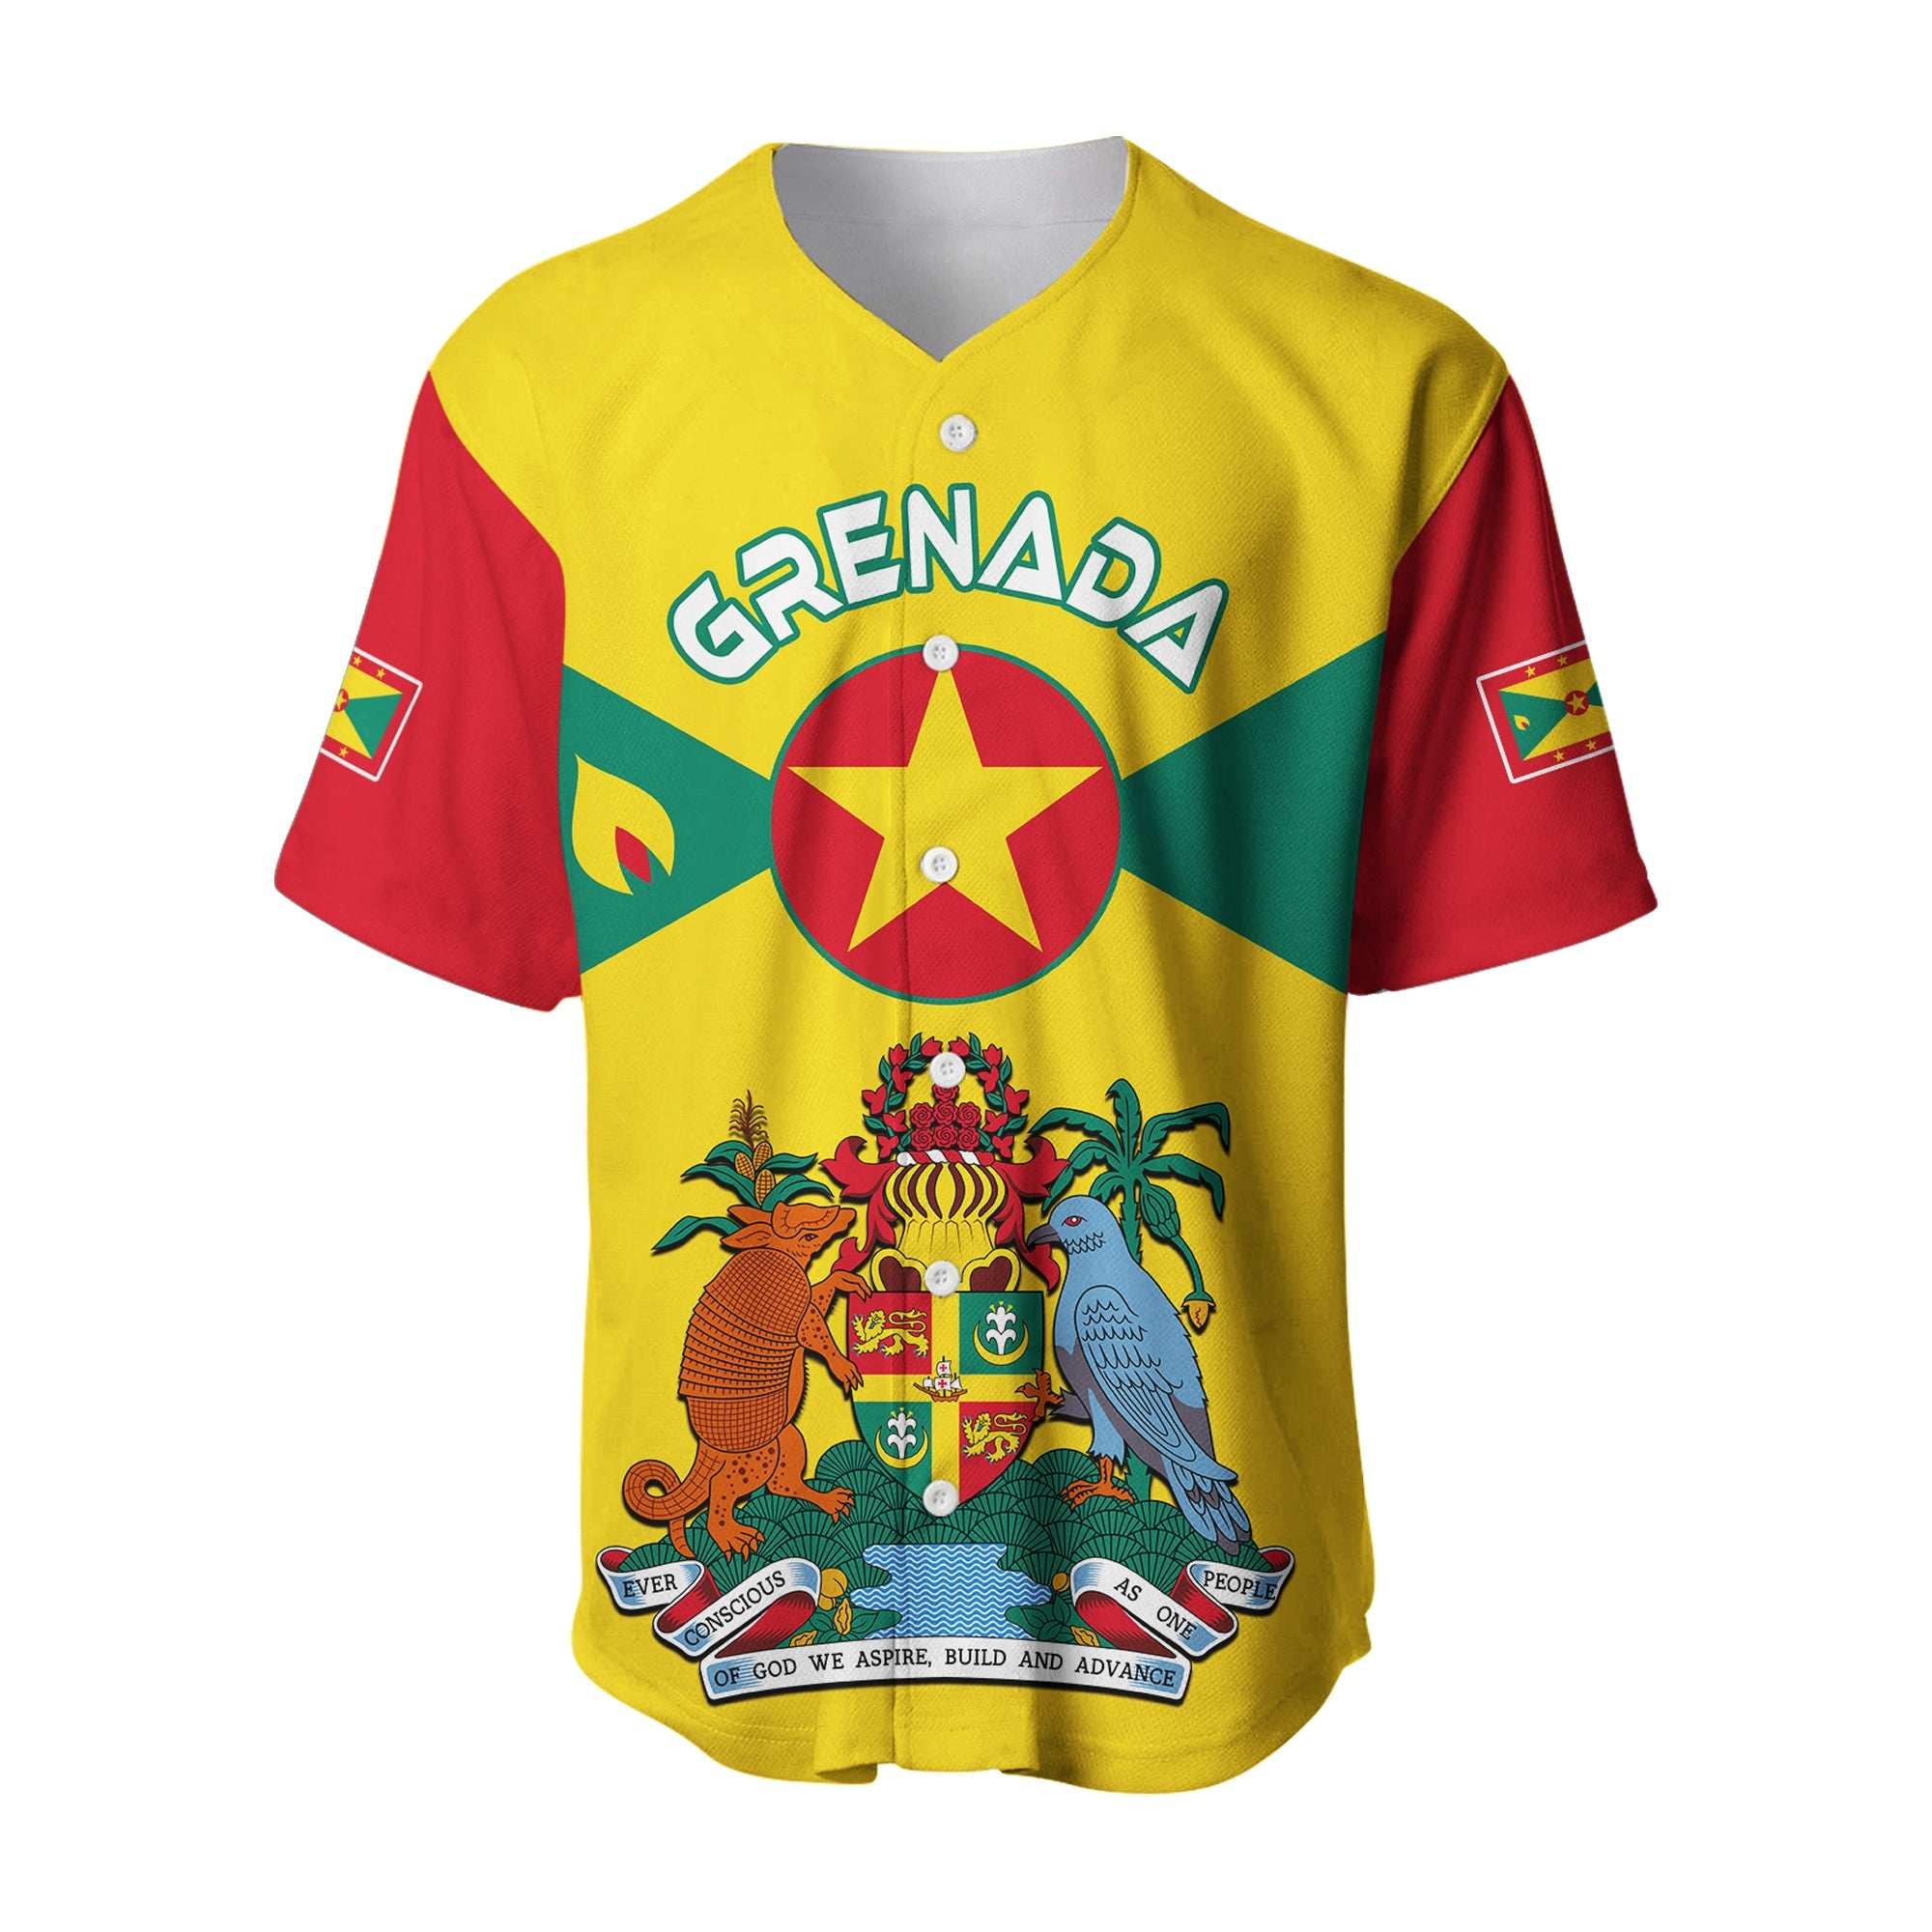 grenada-baseball-jersey-power-grenada-mix-coat-of-arms